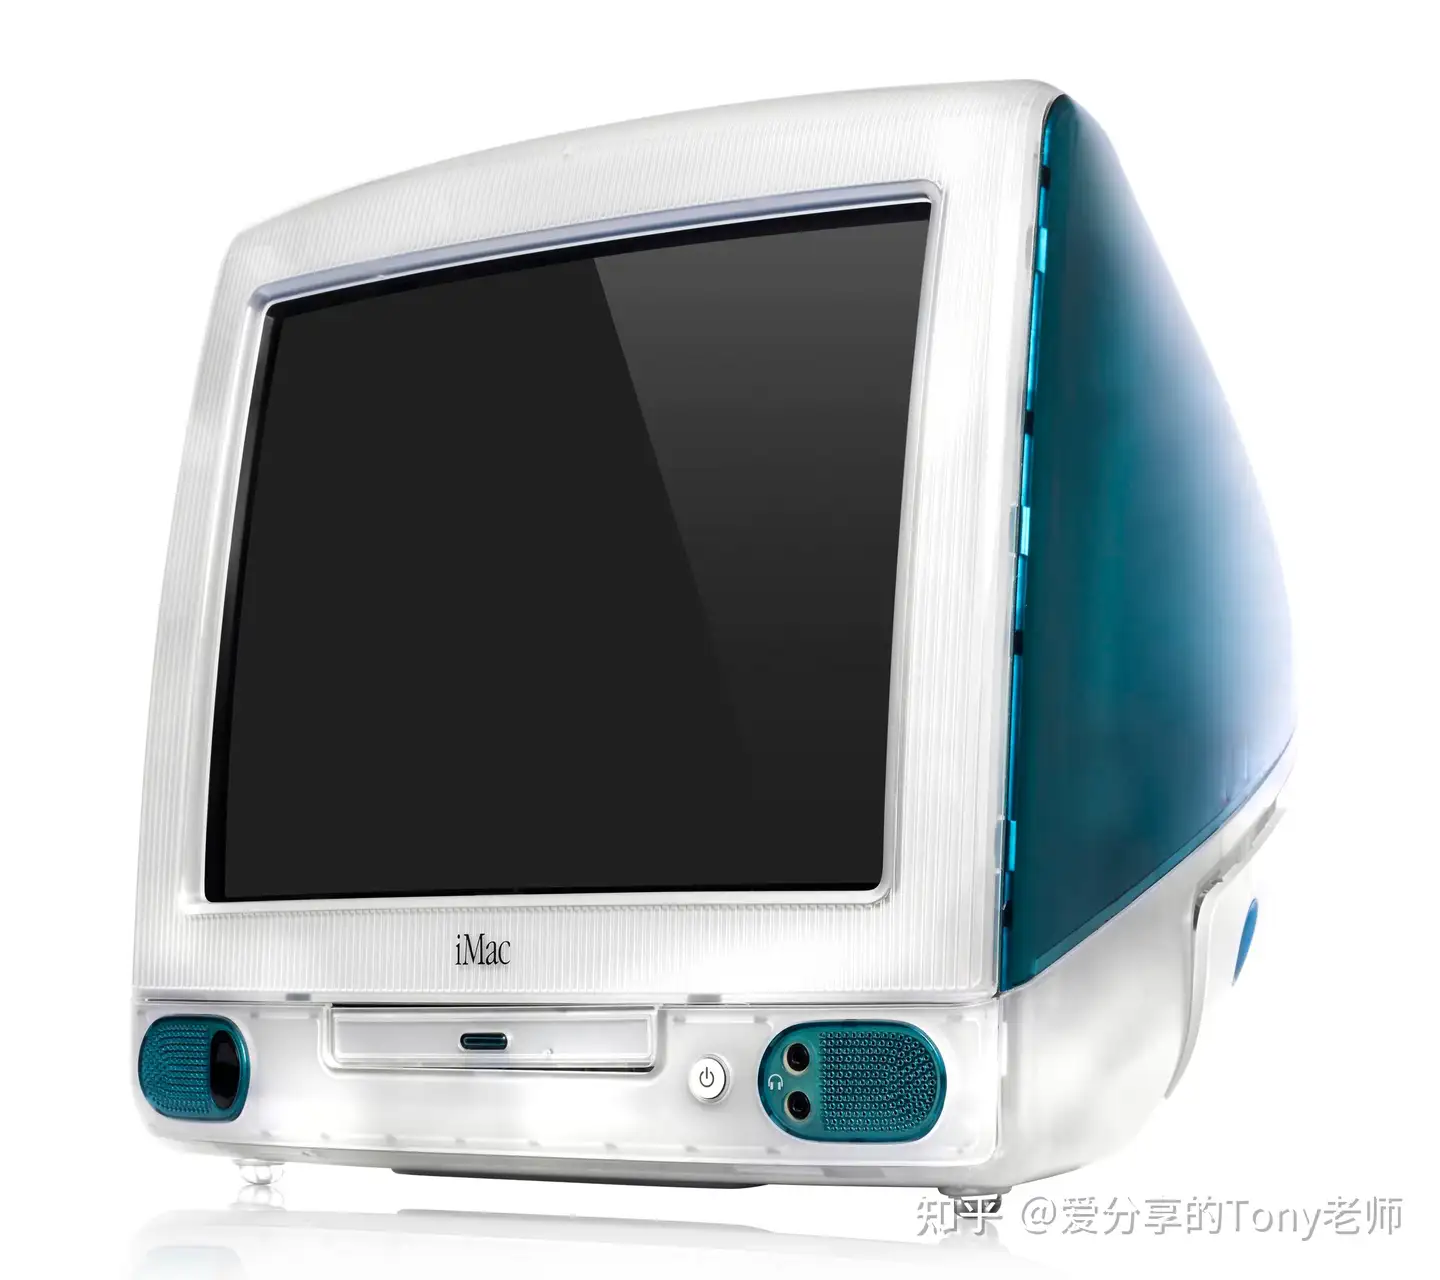 Apple iMac intel core Duo 2006動作商品-